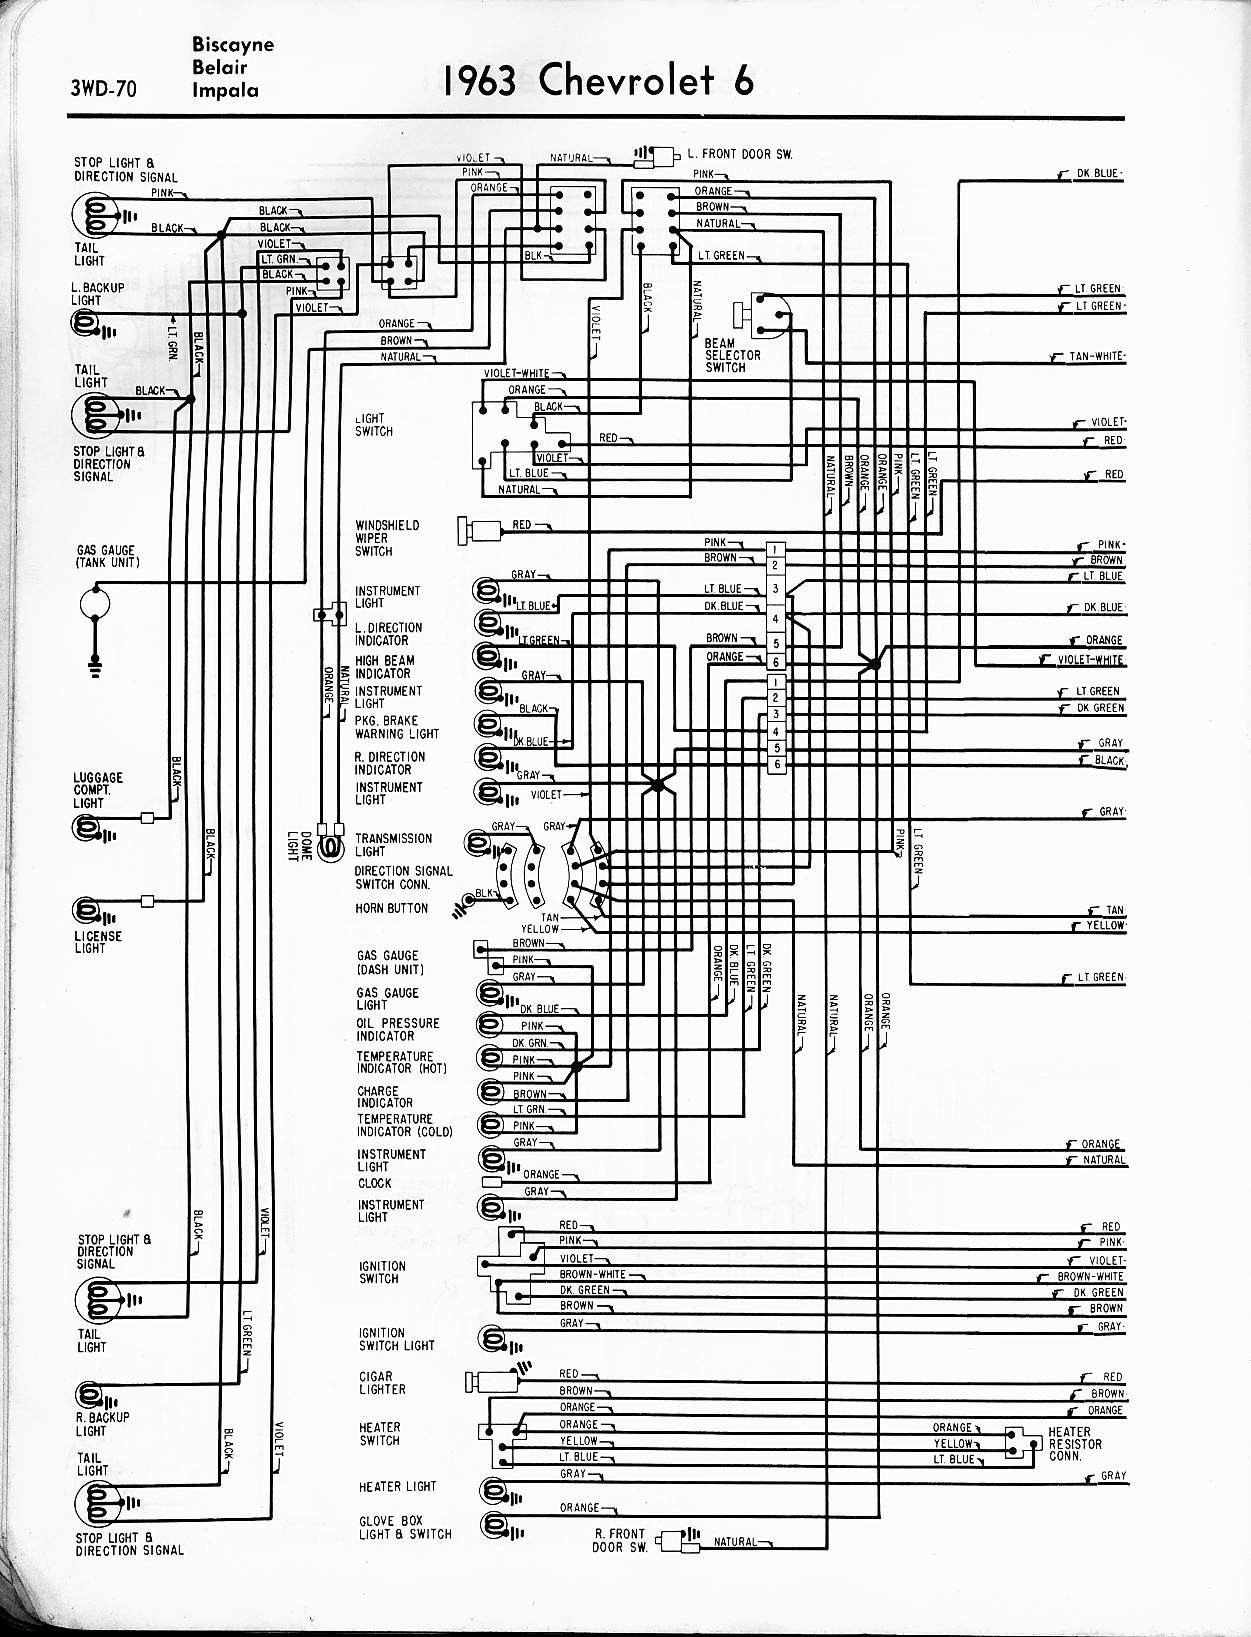 2001 Chevy Impala Radio Wiring Diagram 57 65 Chevy Wiring Diagrams Of 2001 Chevy Impala Radio Wiring Diagram